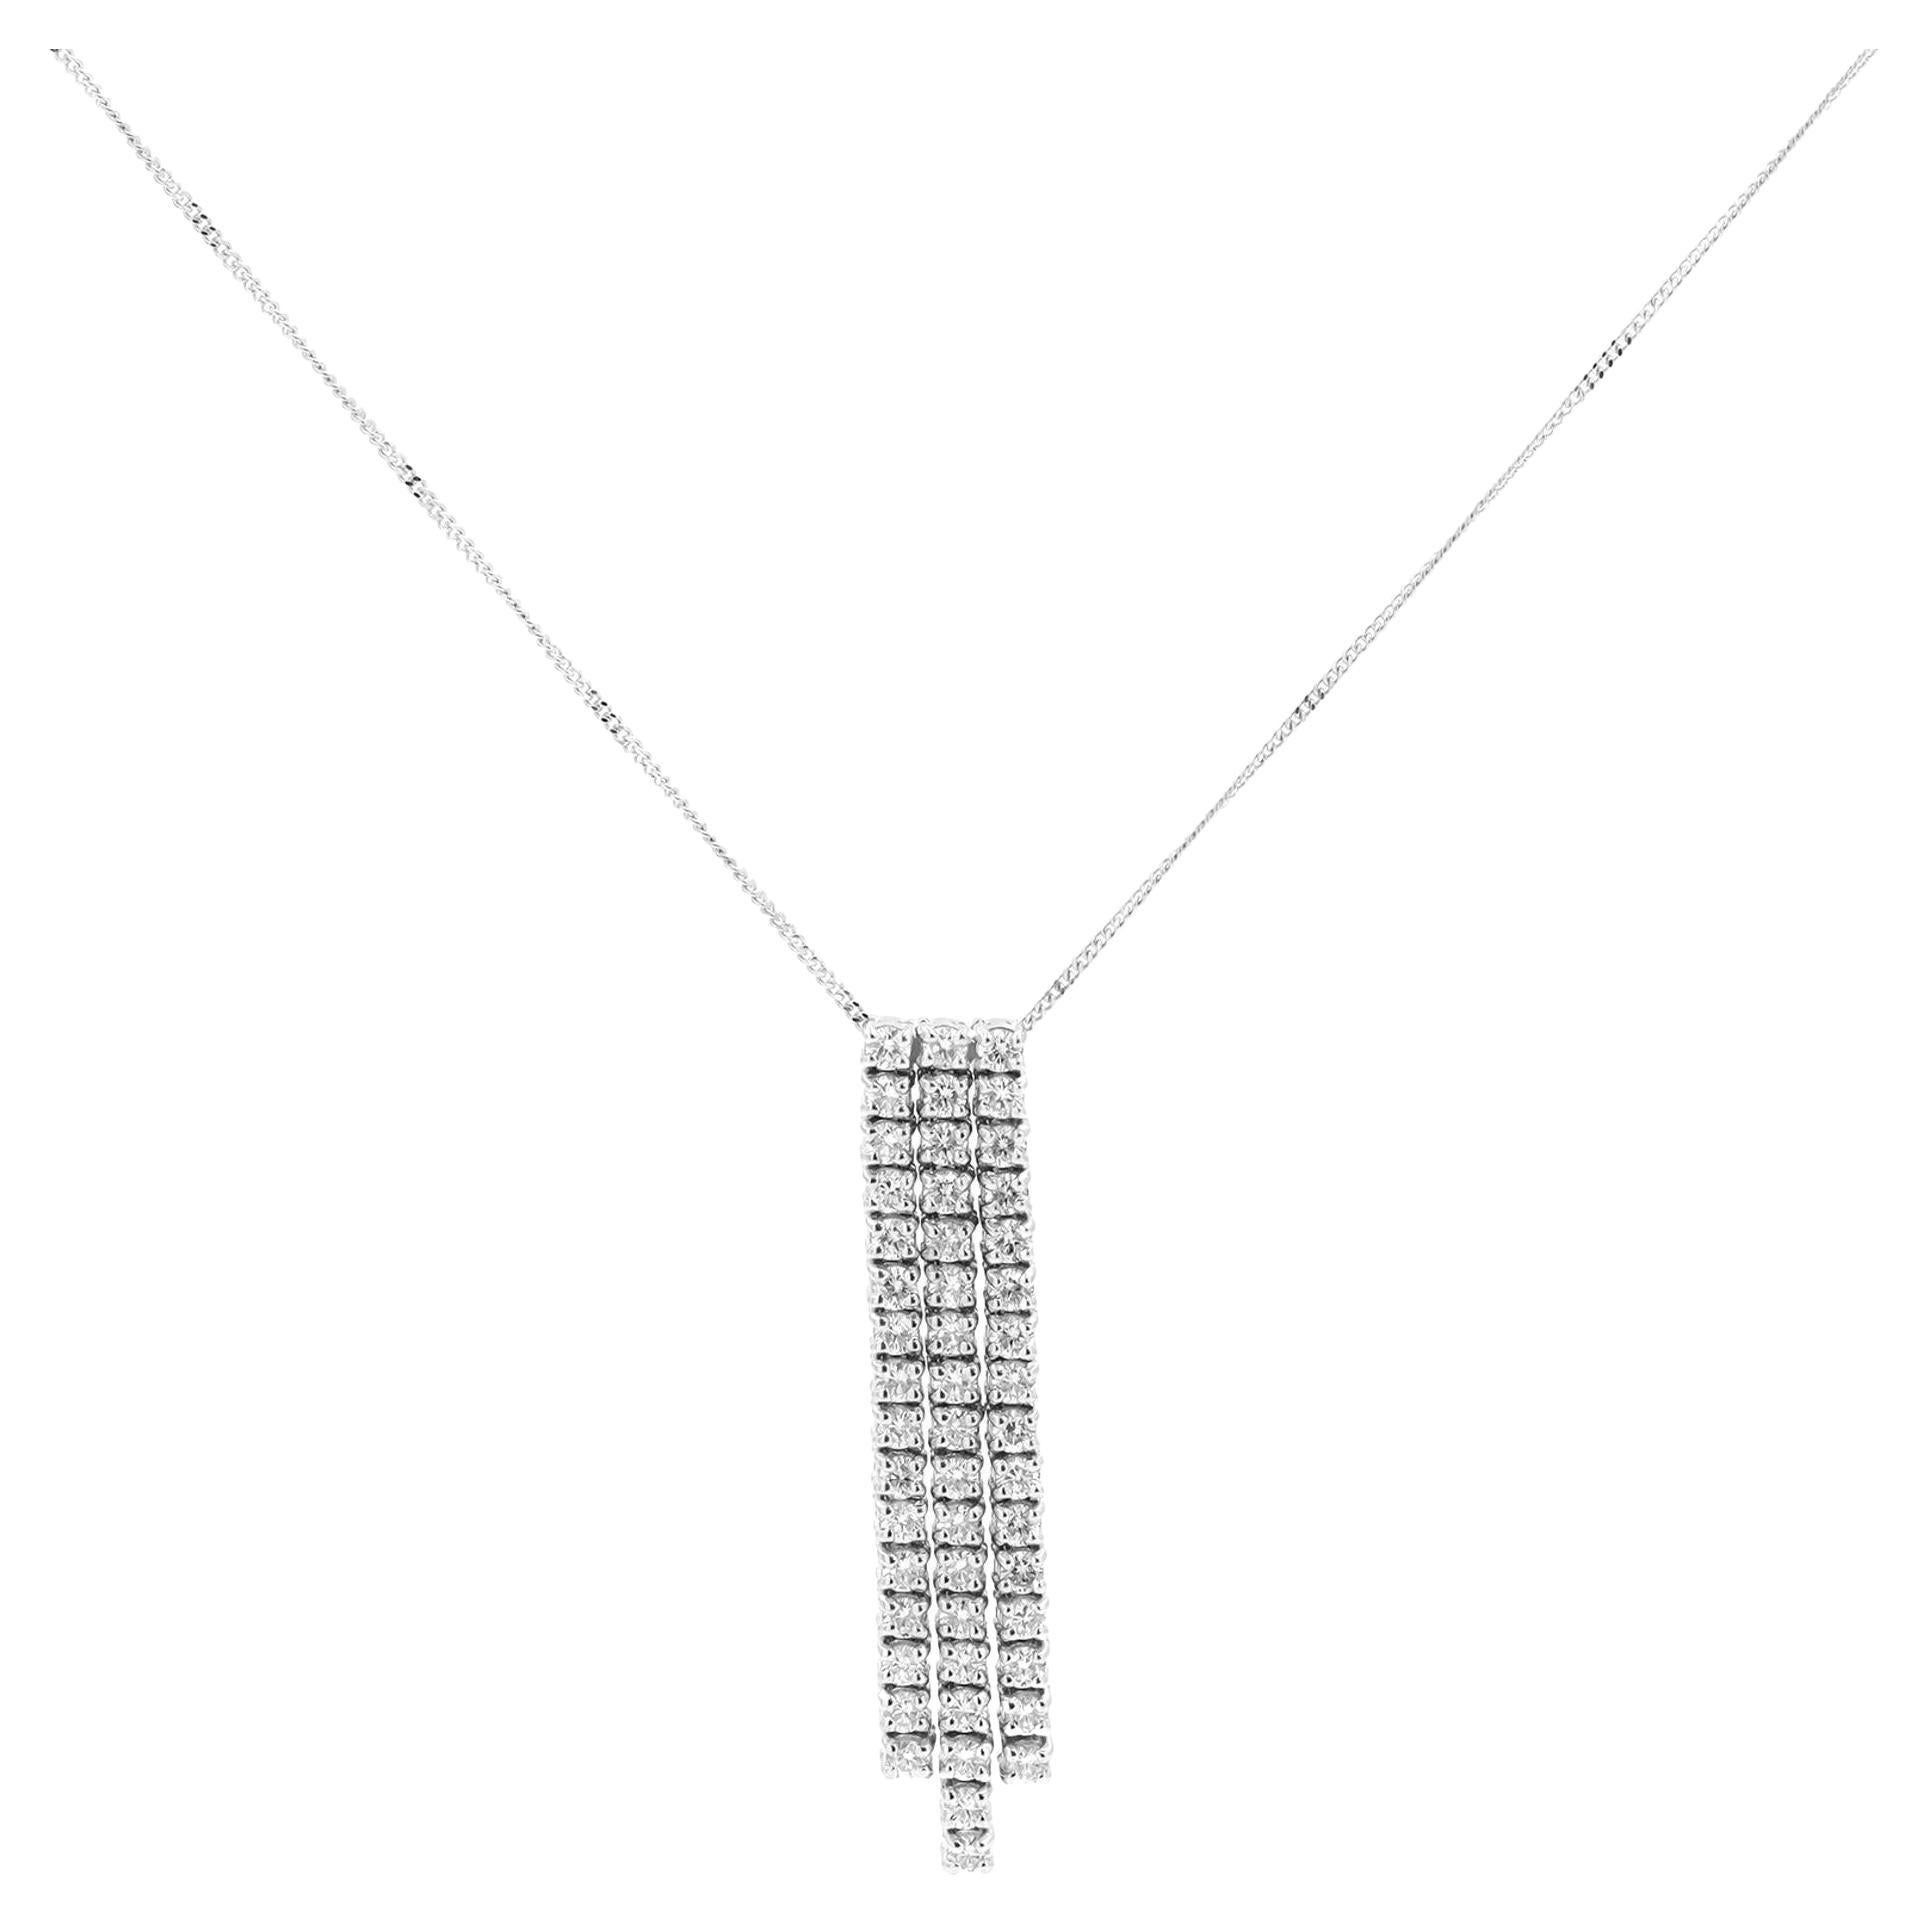 Piero Milano Natural Diamond Drop Pendant Necklace 18K White Gold 1.68cttw For Sale